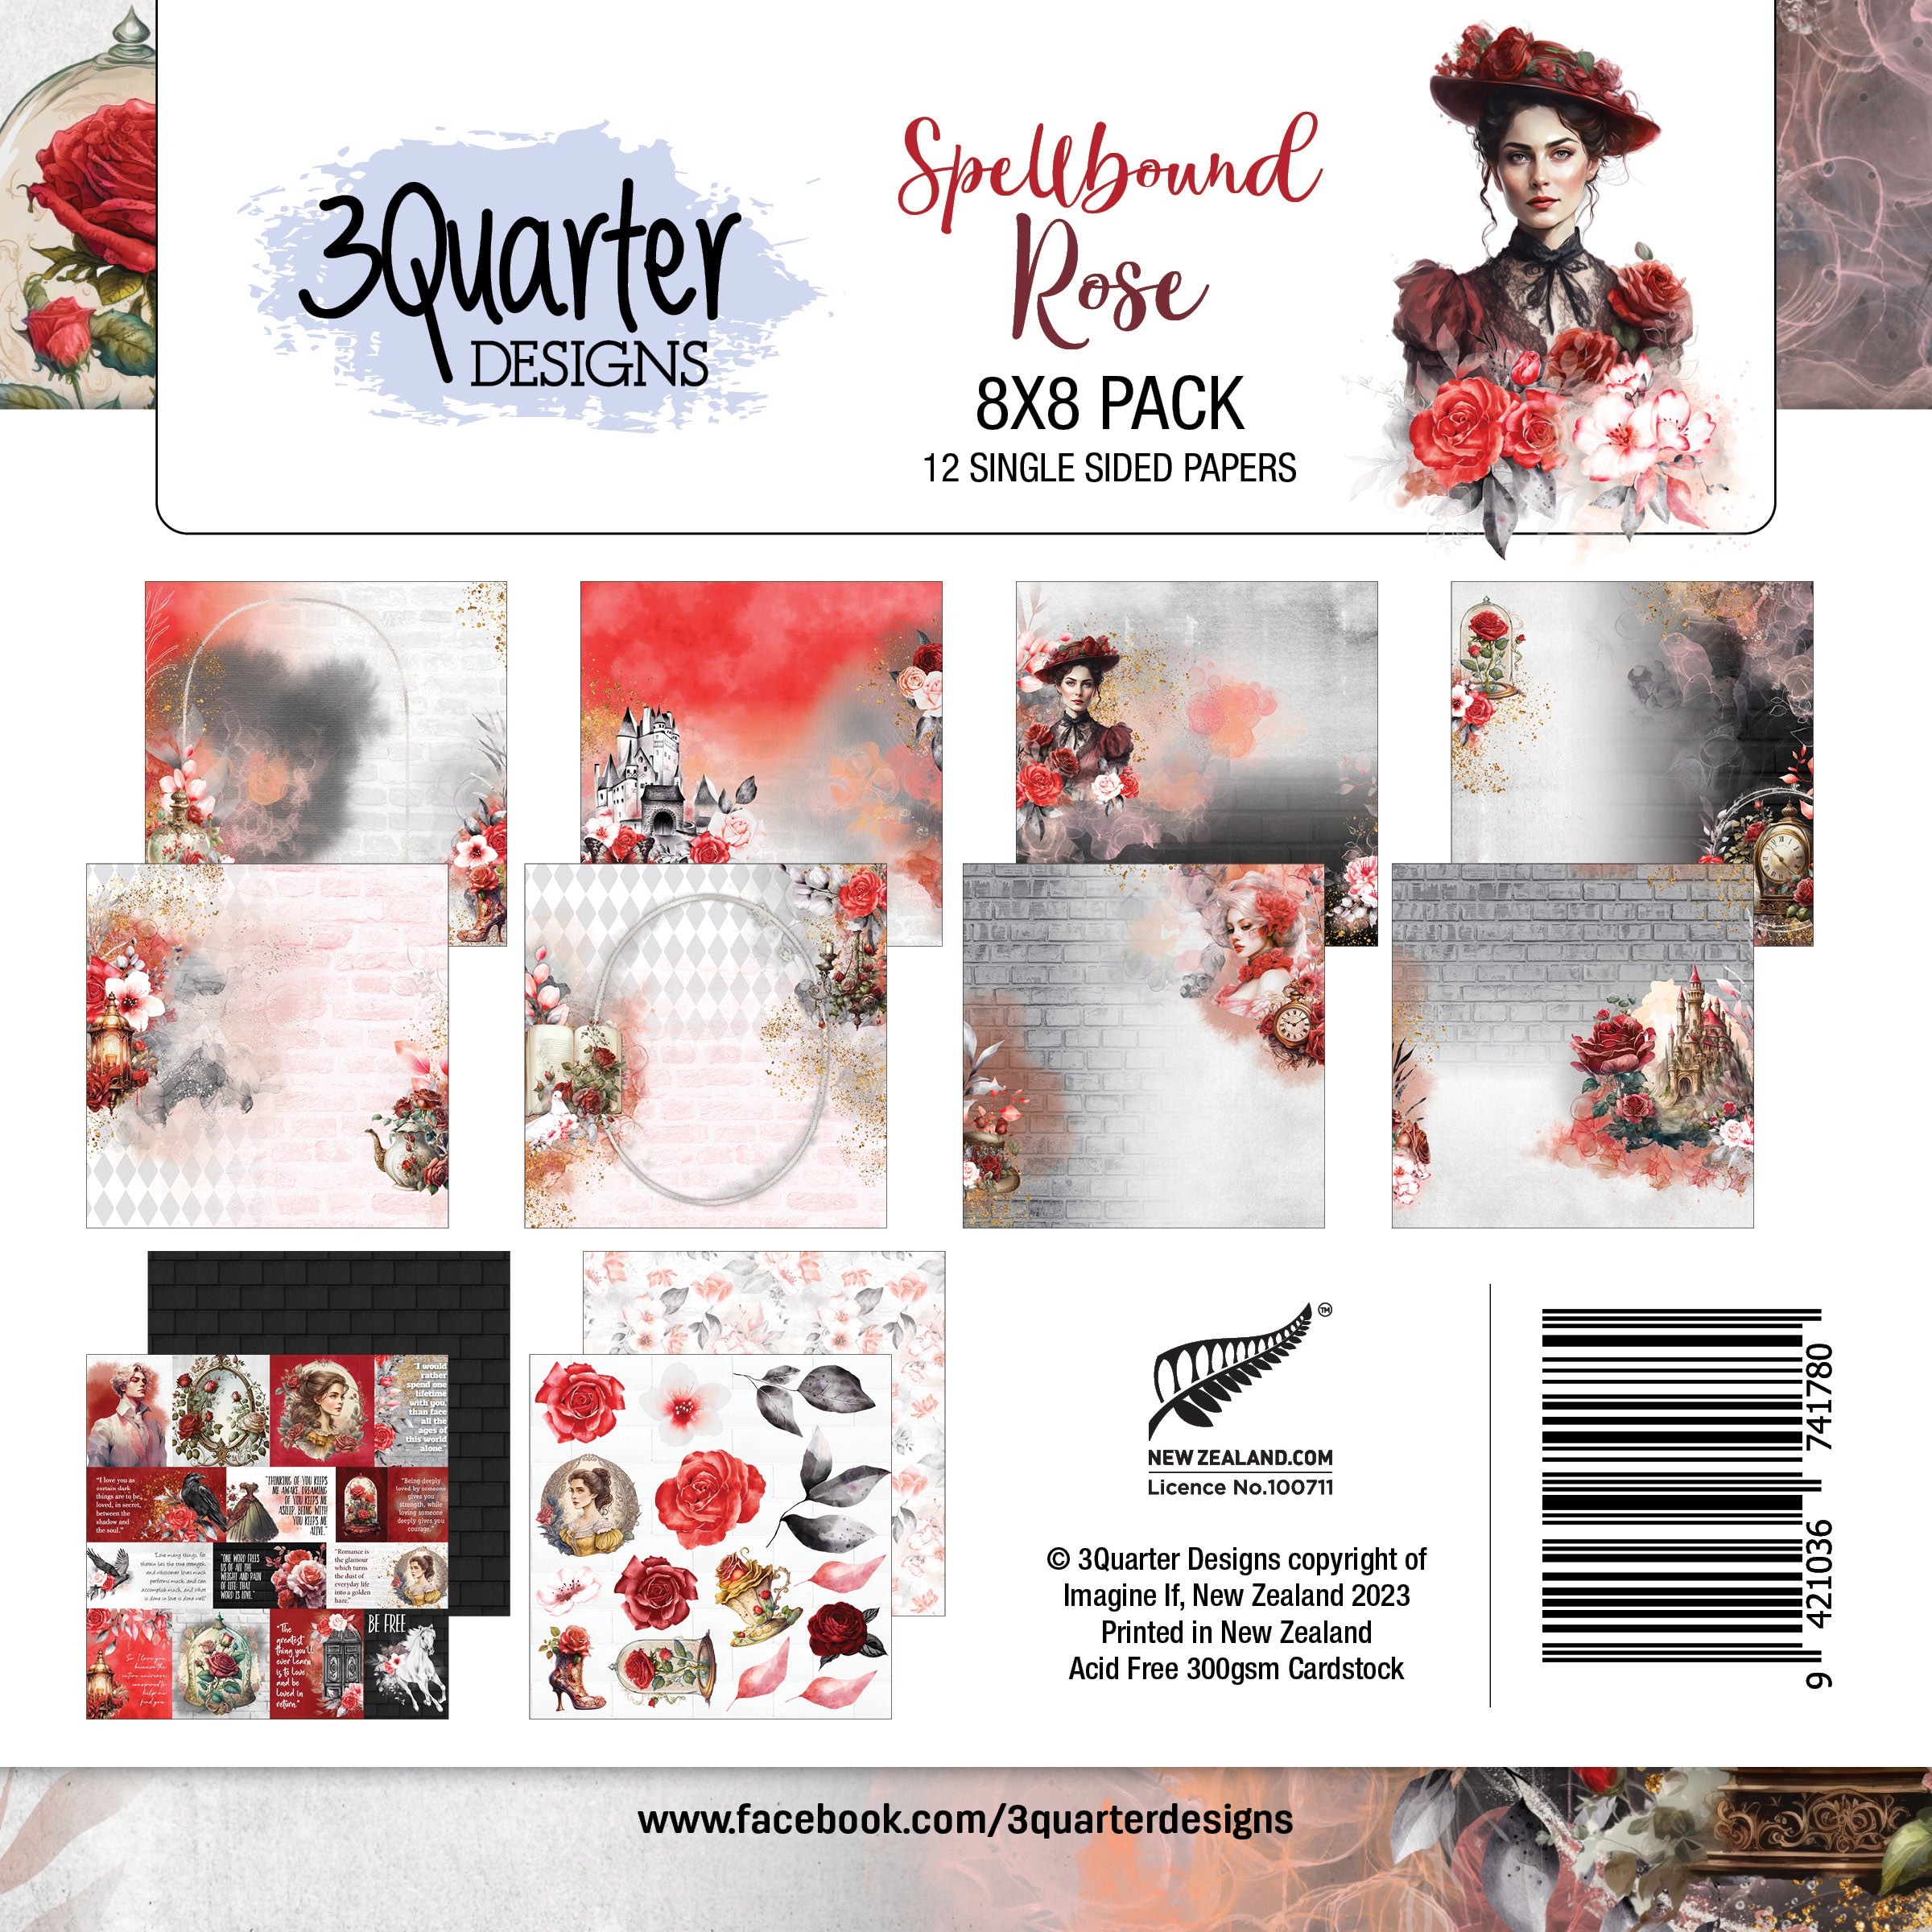 Spellbound Rose 8x8 Pack